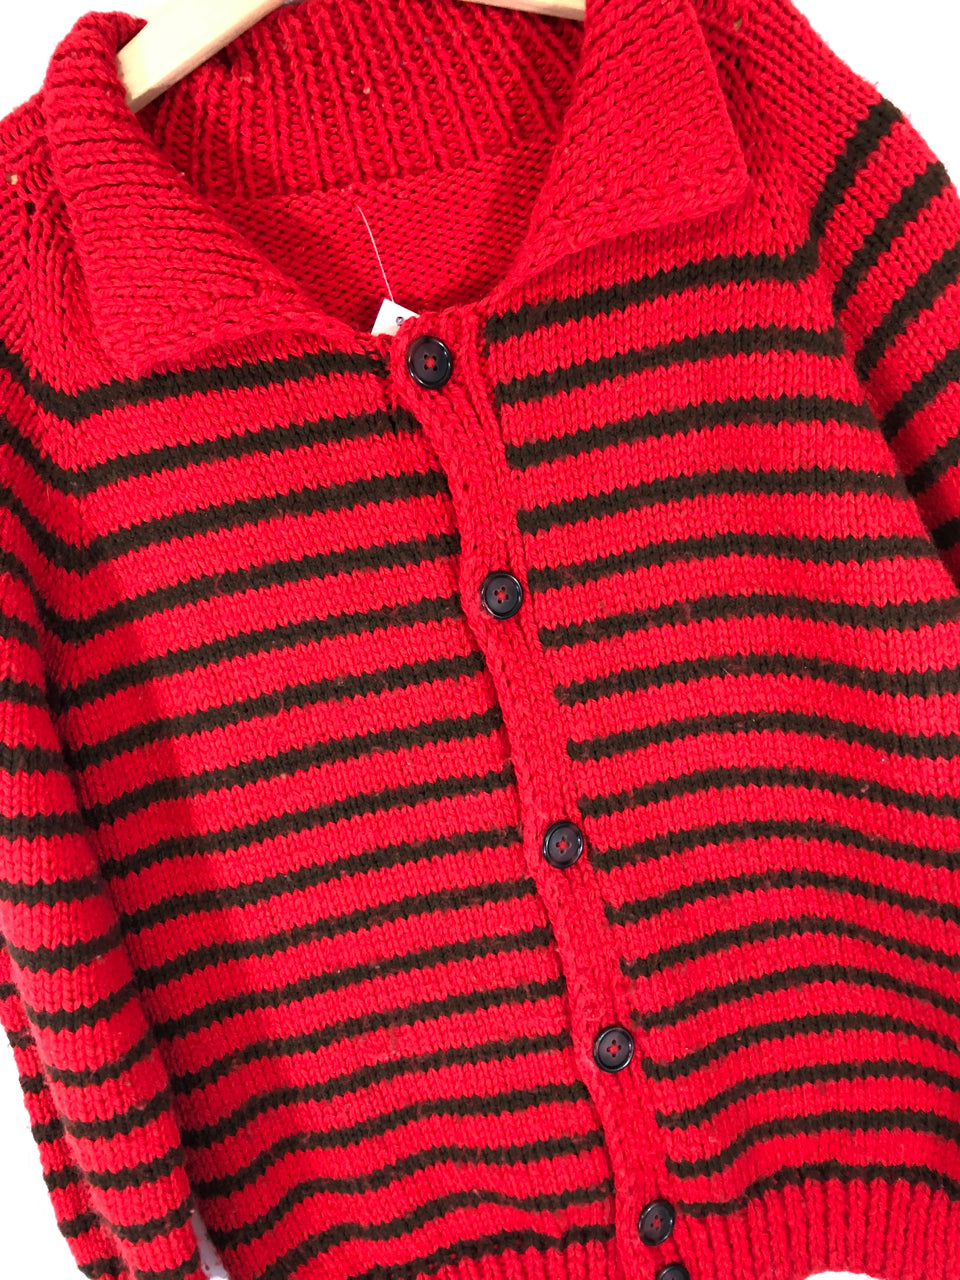 Kids' Hand Knit Striped Cardigan